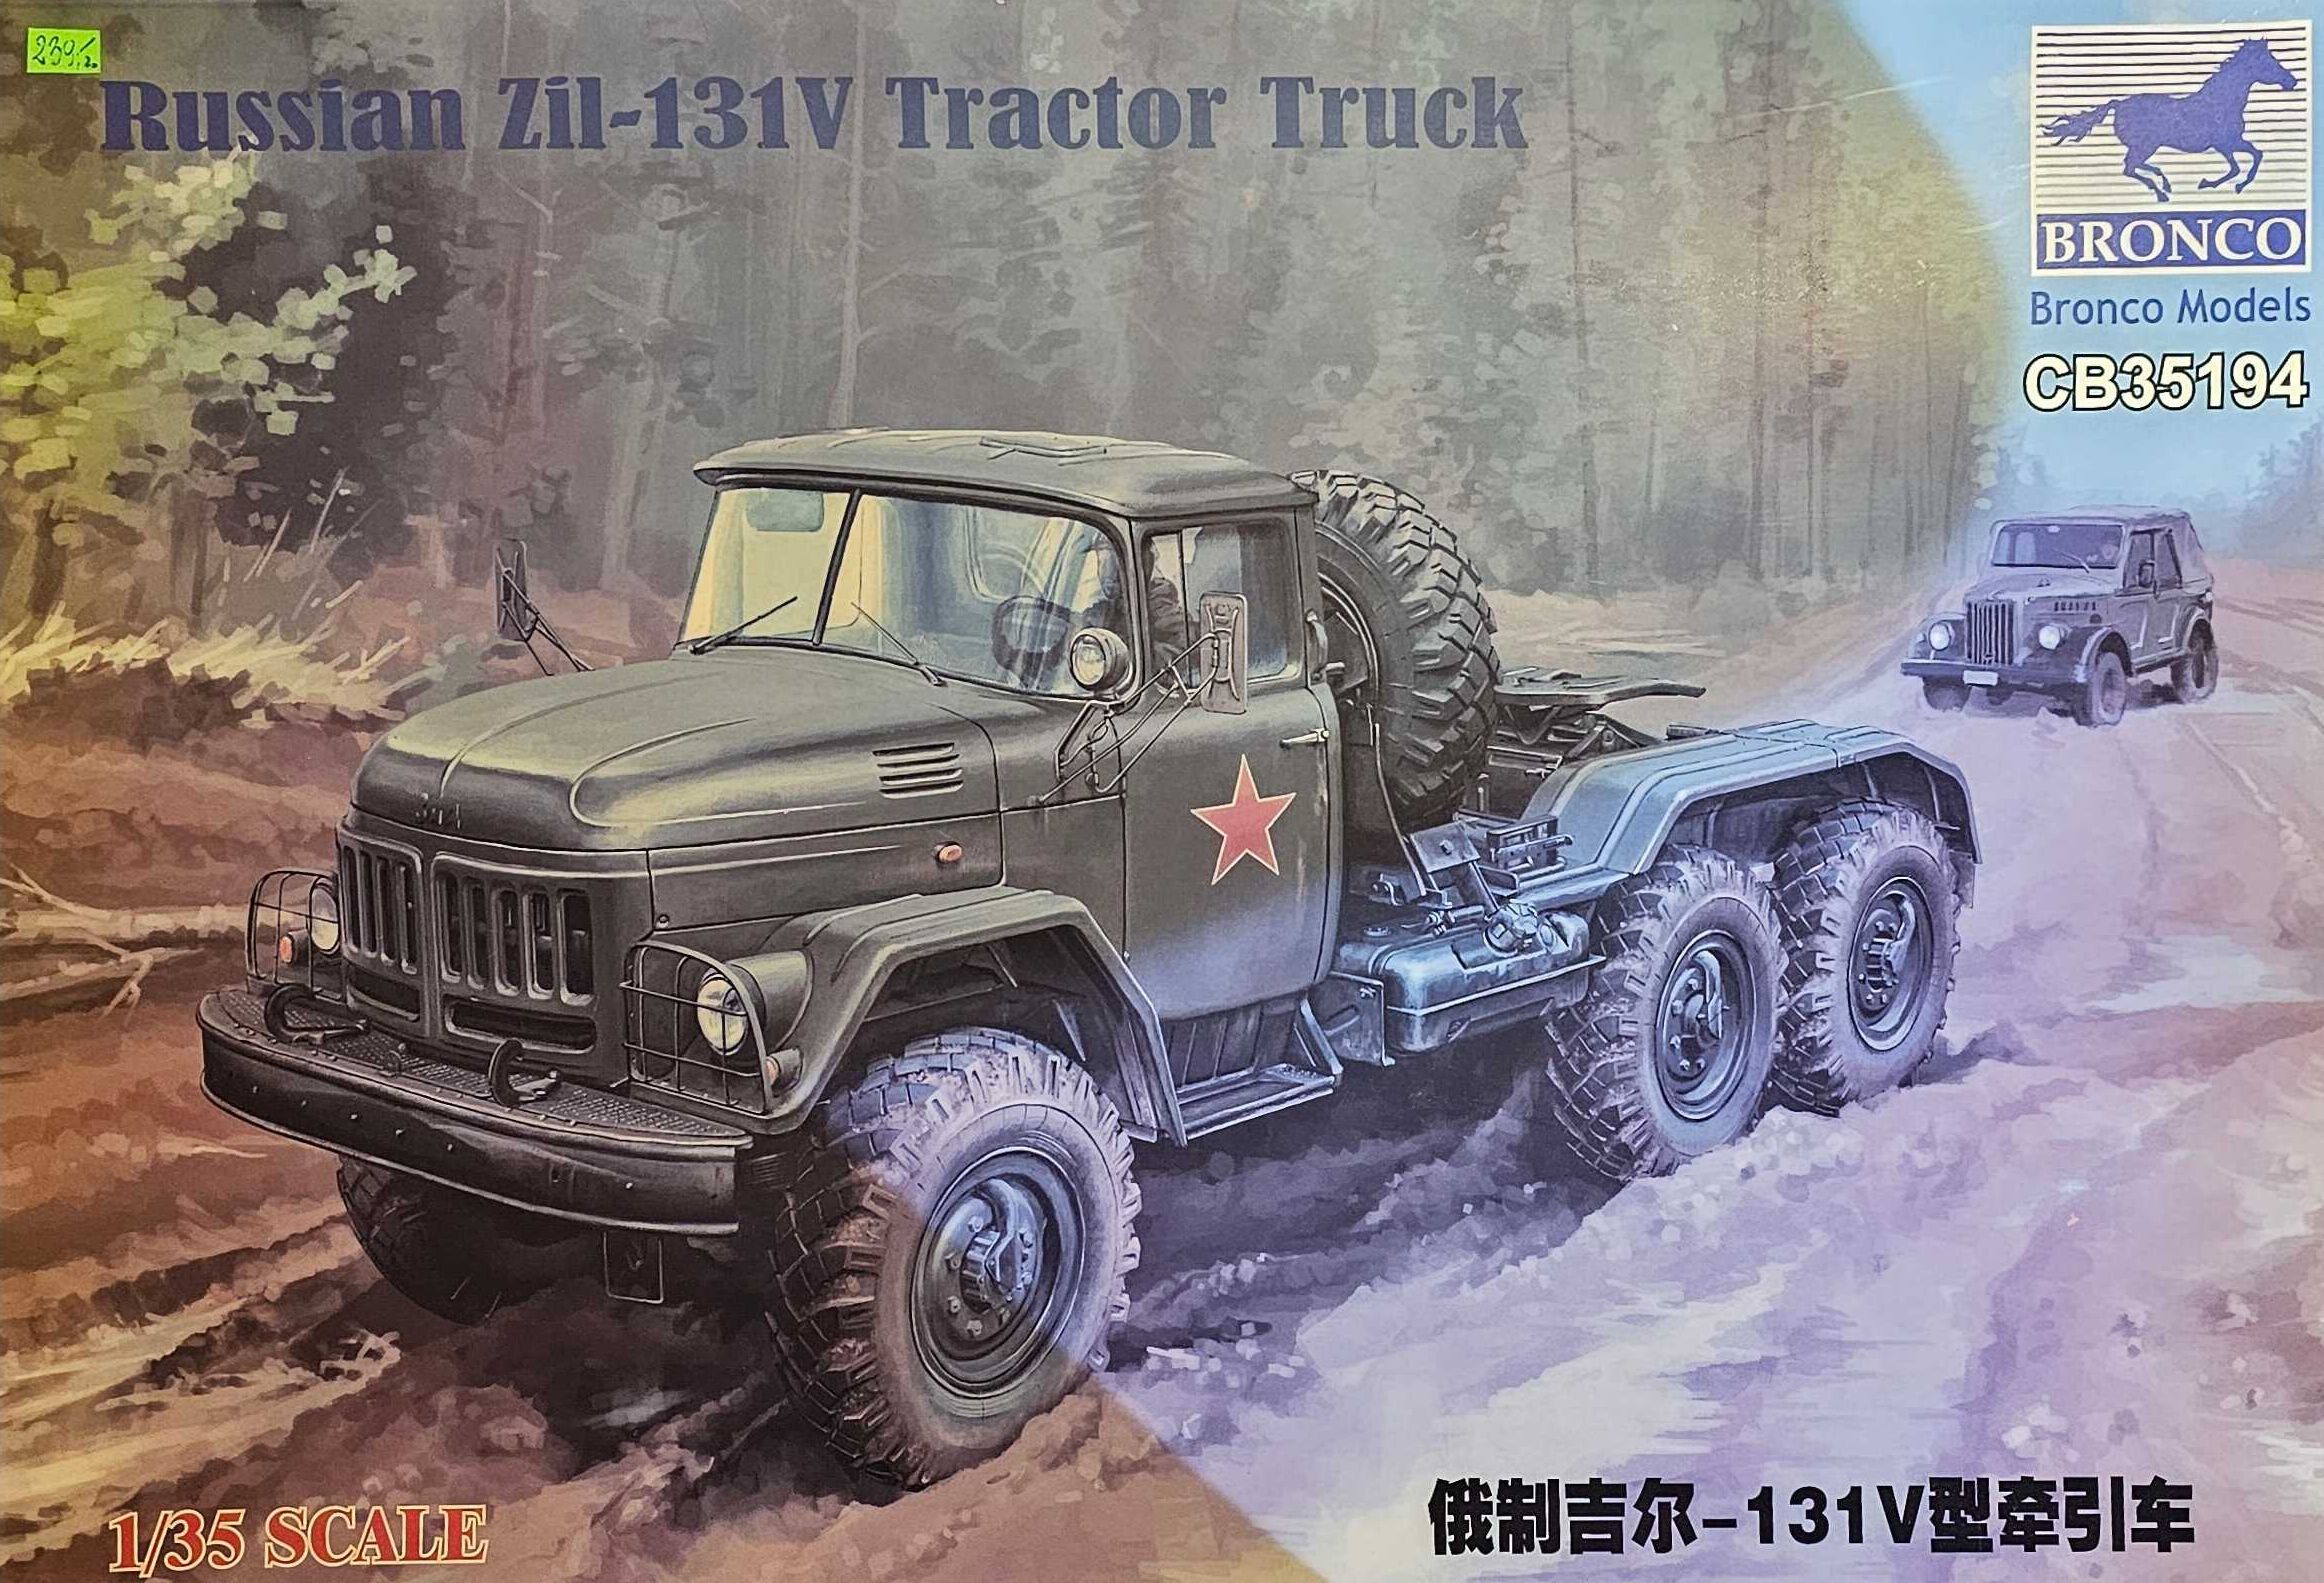 Bronco CB35194 Russian Zil-131V Tractor Truck sklep mod. Planeta Płock